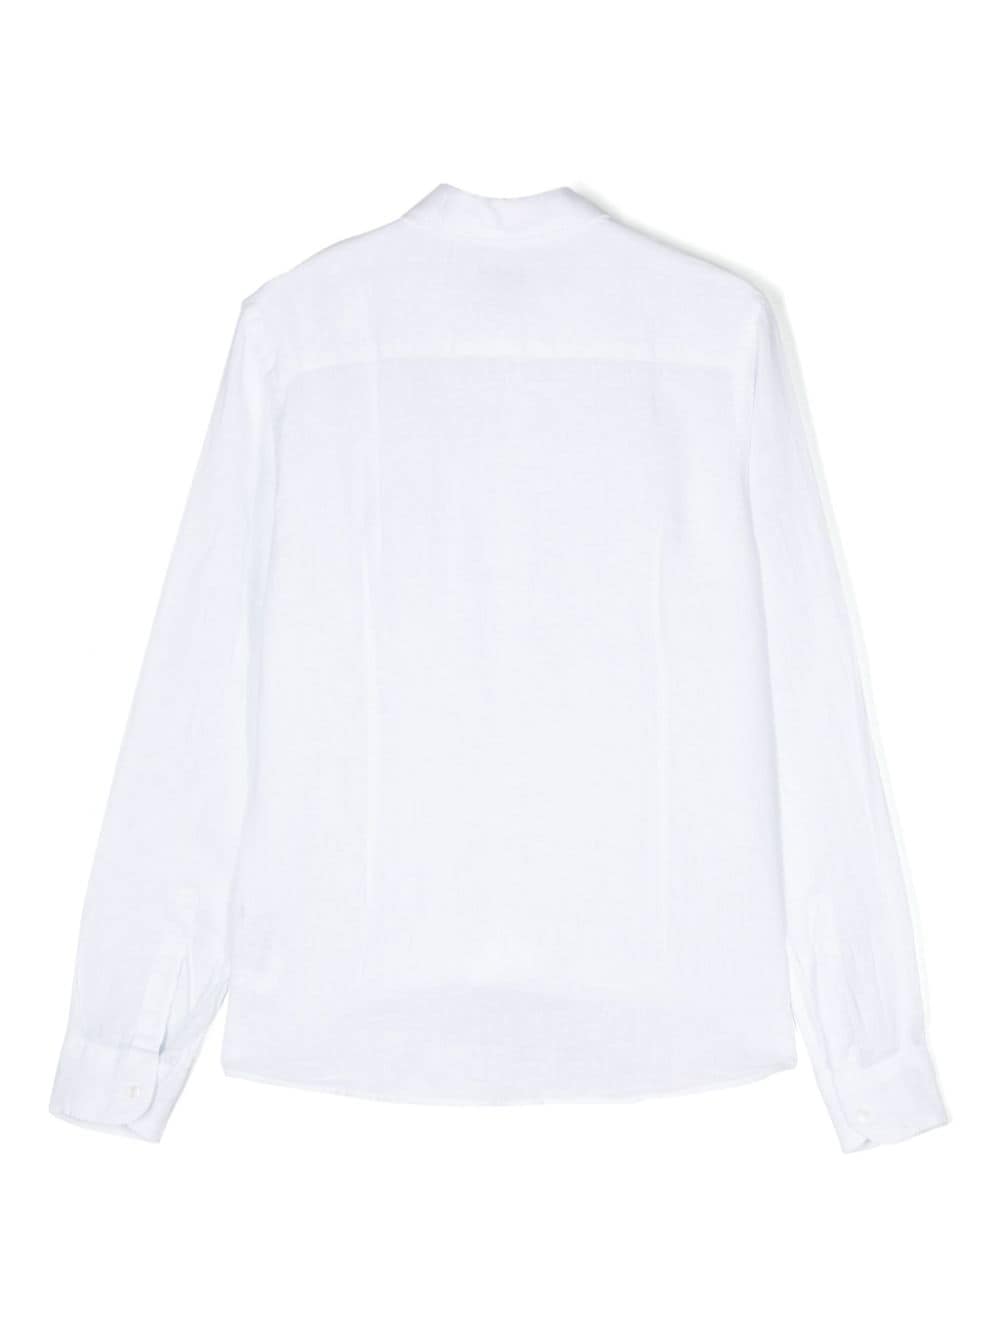 White shirt for boys